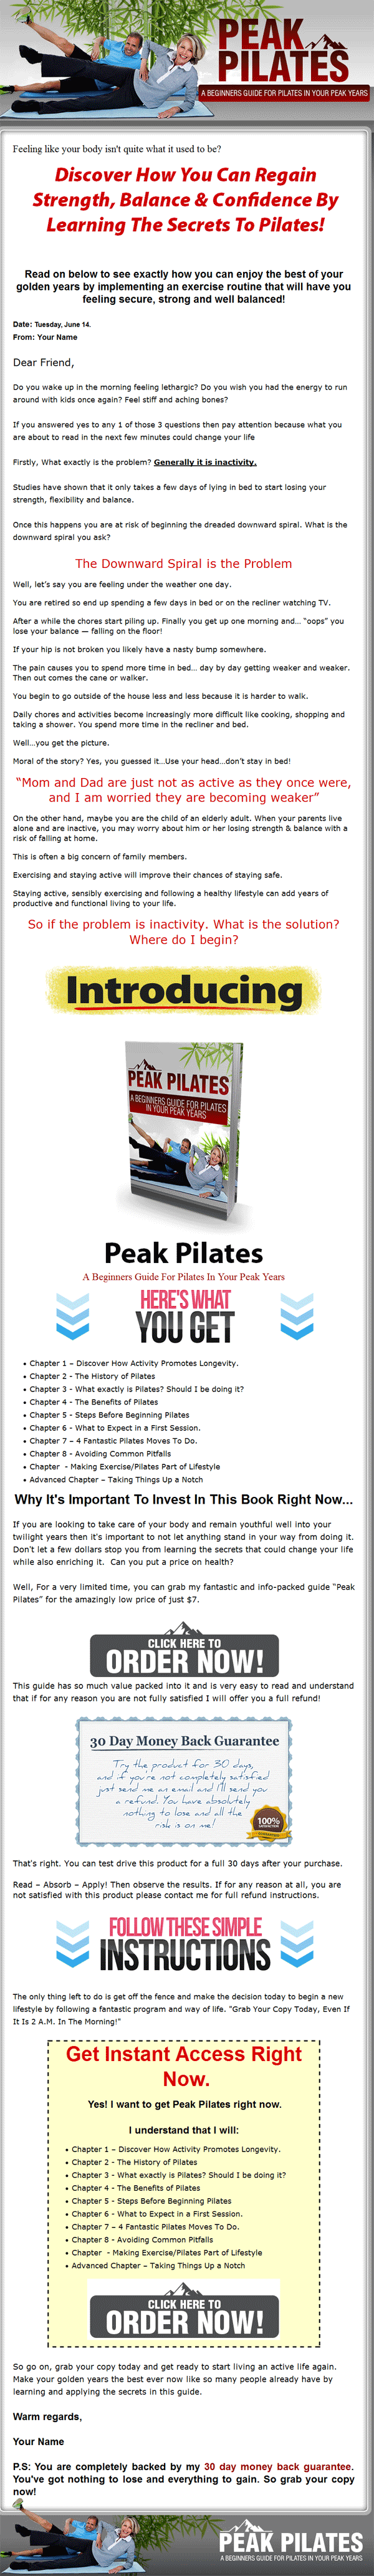 peak pilates ebook